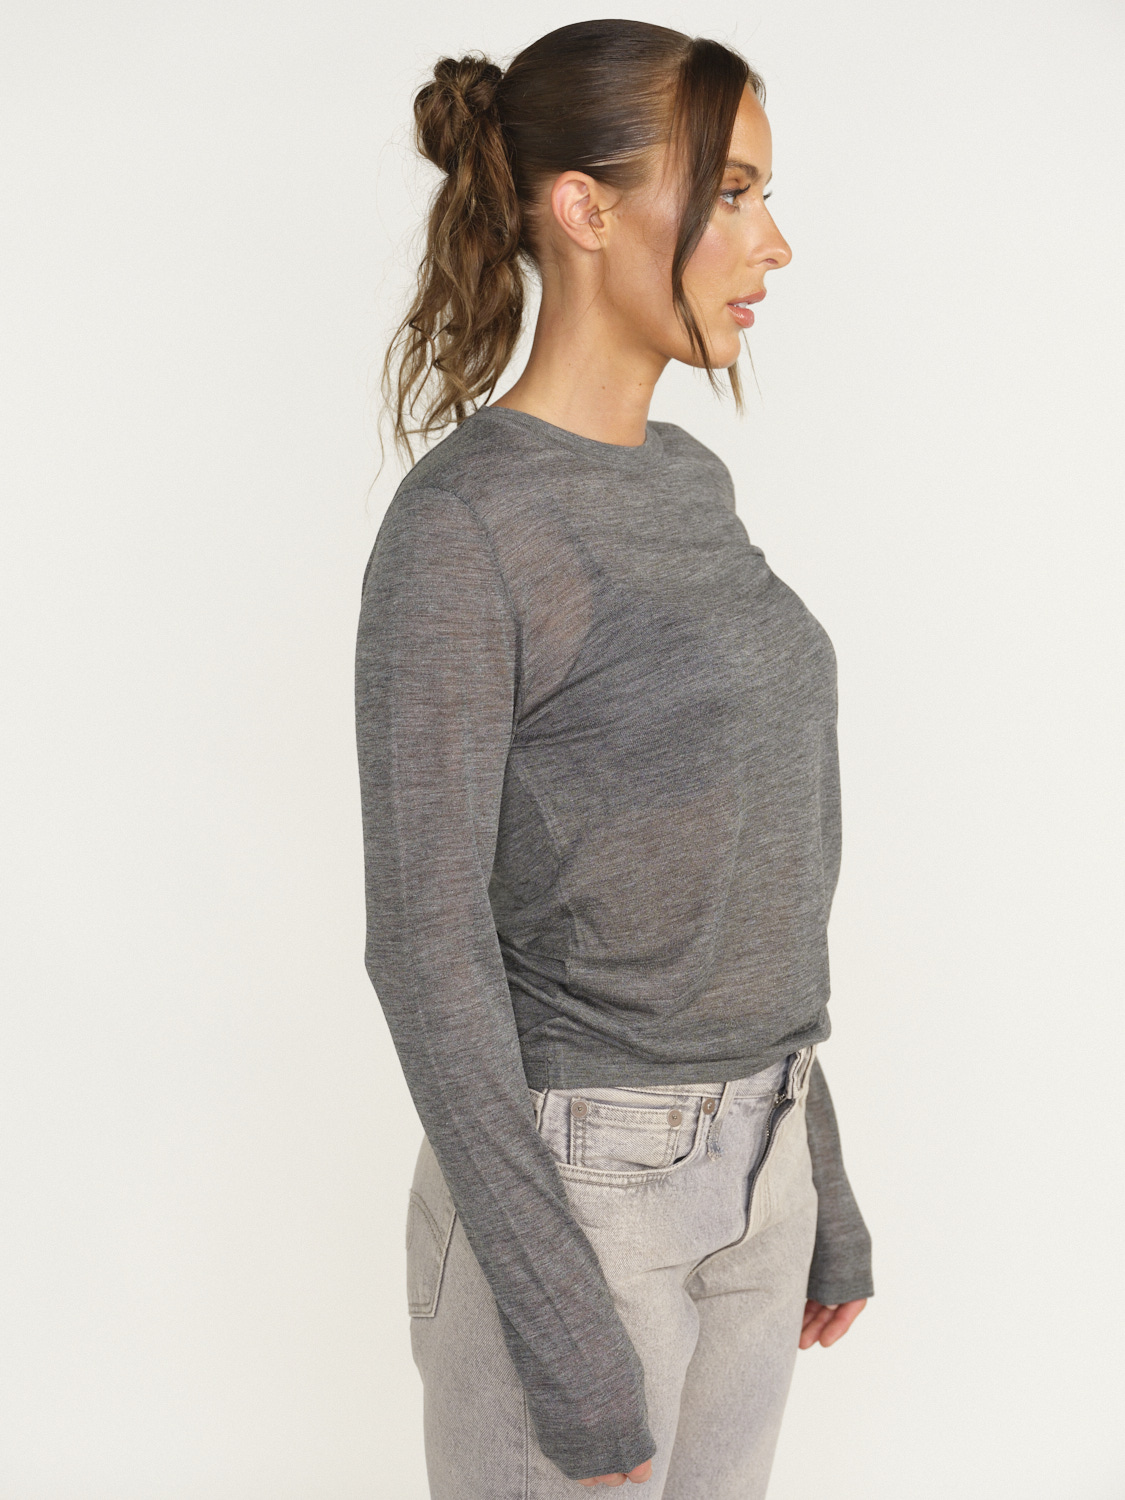 Nili Lotan Candice Sweater - Silk long sleeve shirt grey S